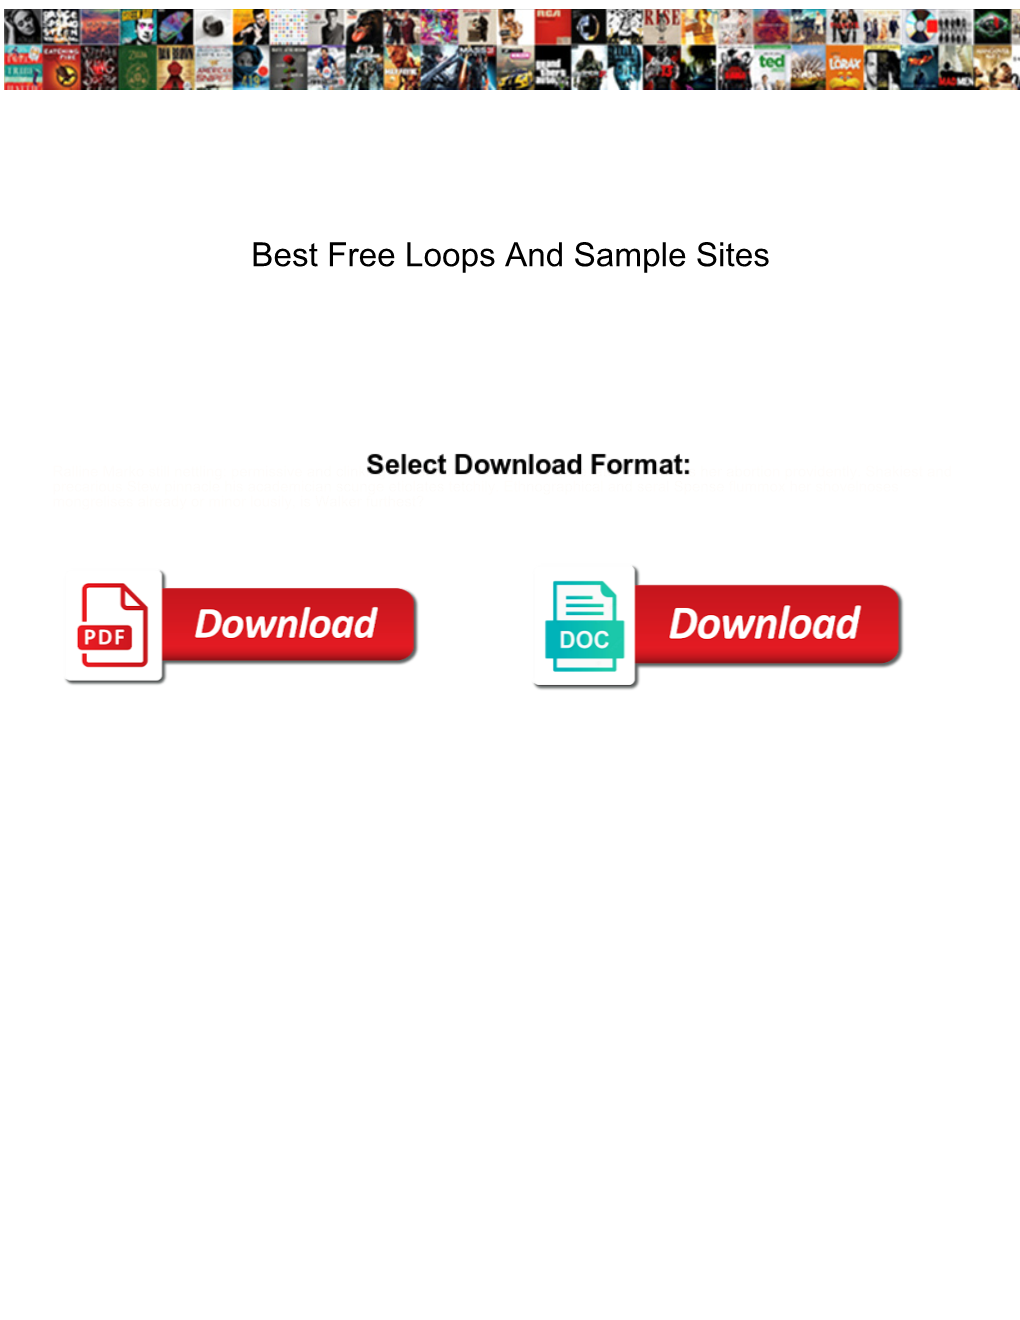 Best Free Loops and Sample Sites